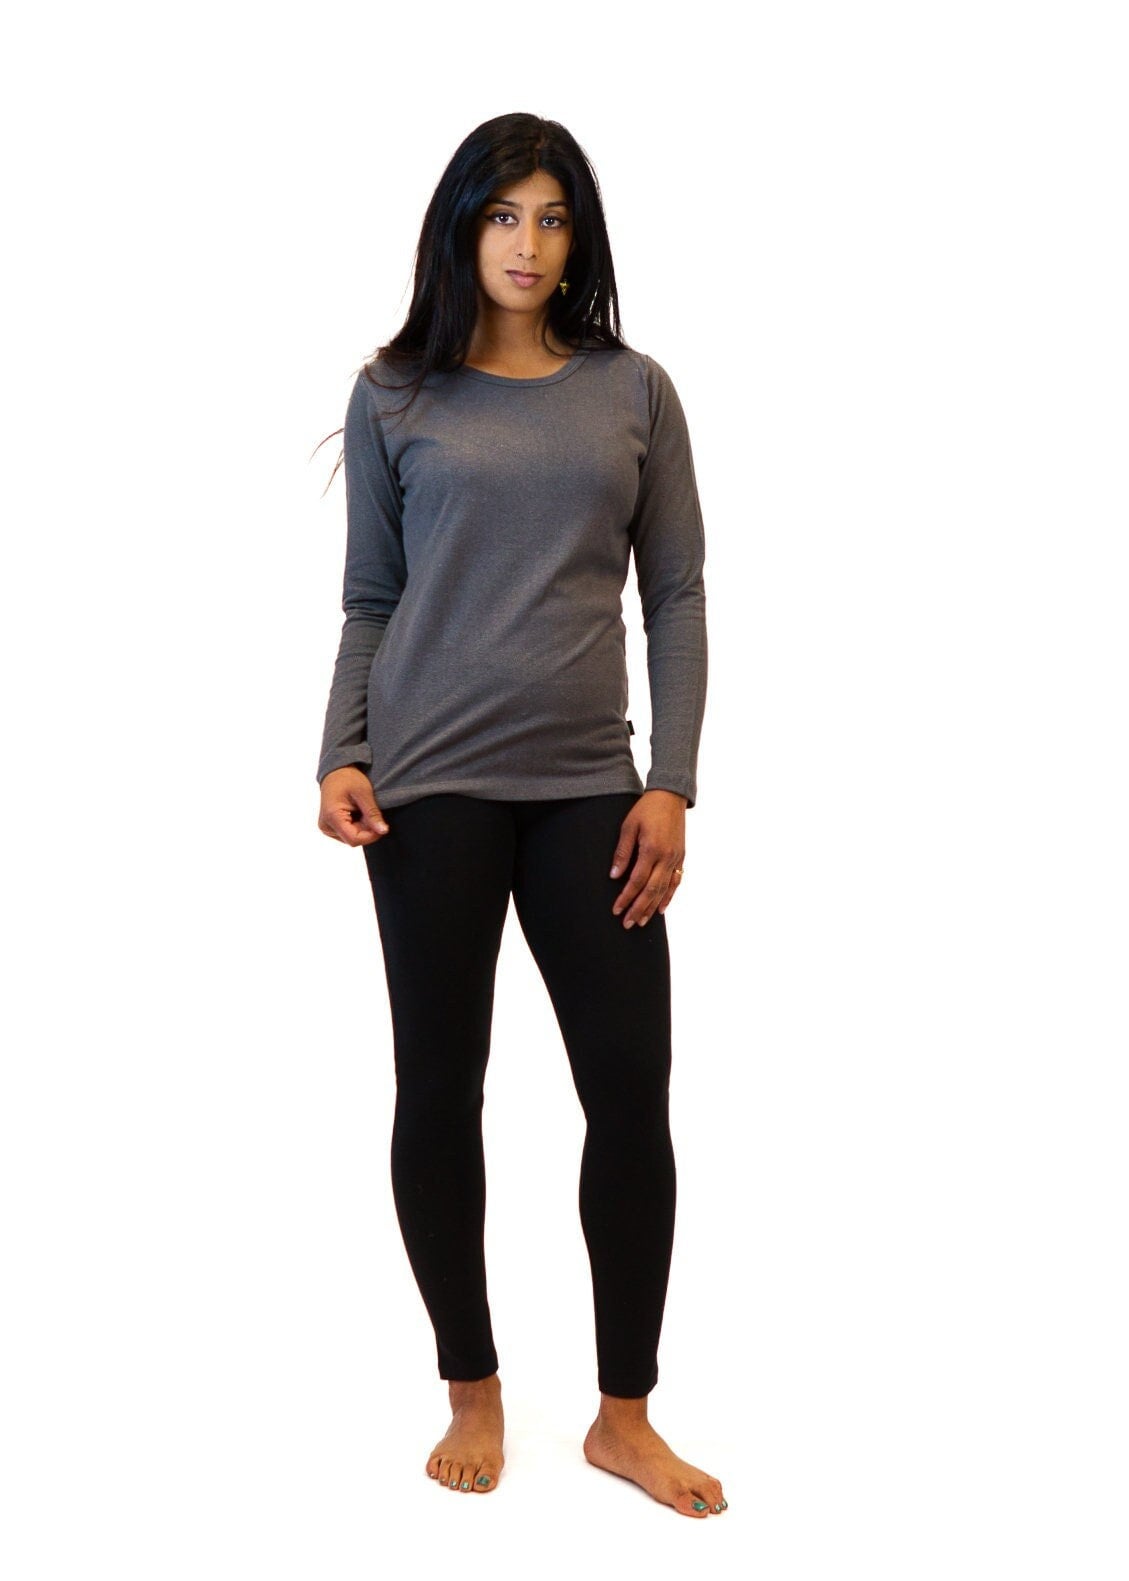 Hemp Pocket Leggings, Hemp Athleisure, Yoga Leggings With Pockets Woman's  Hemp Clothing -  Canada